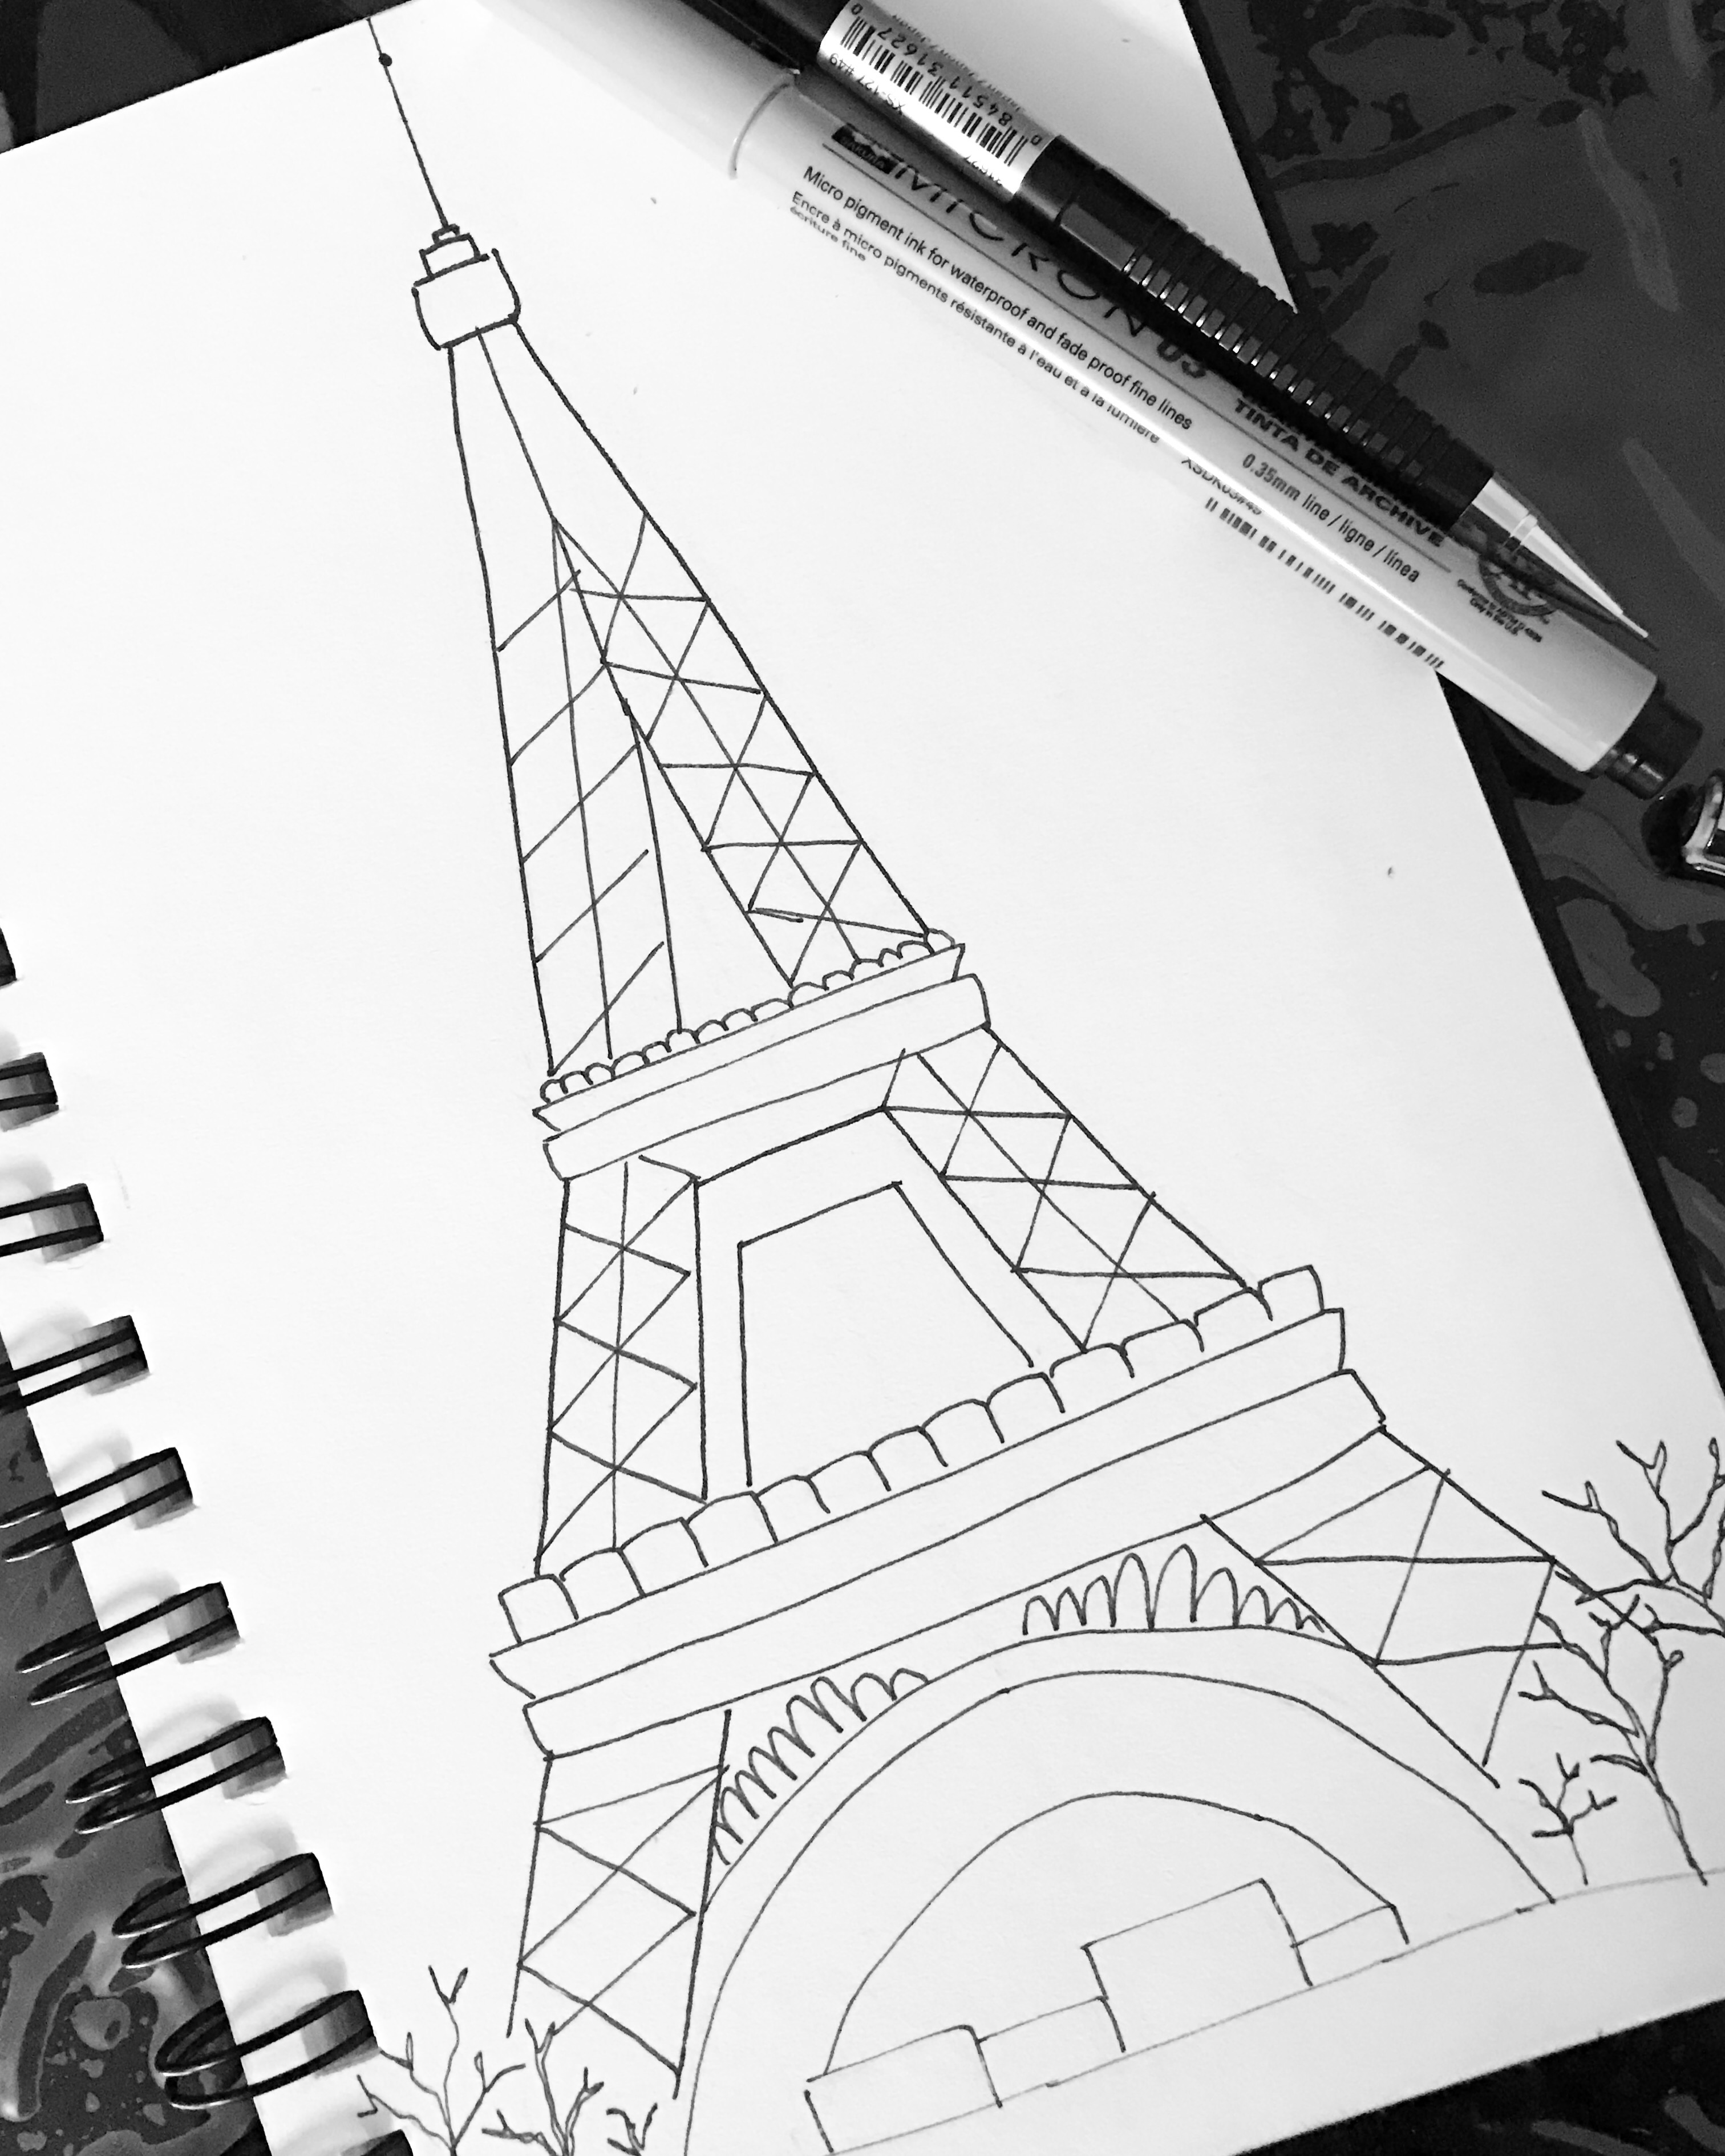 Eiffel Tower Pencil Sketch V2.0 by MMKV3580 on DeviantArt